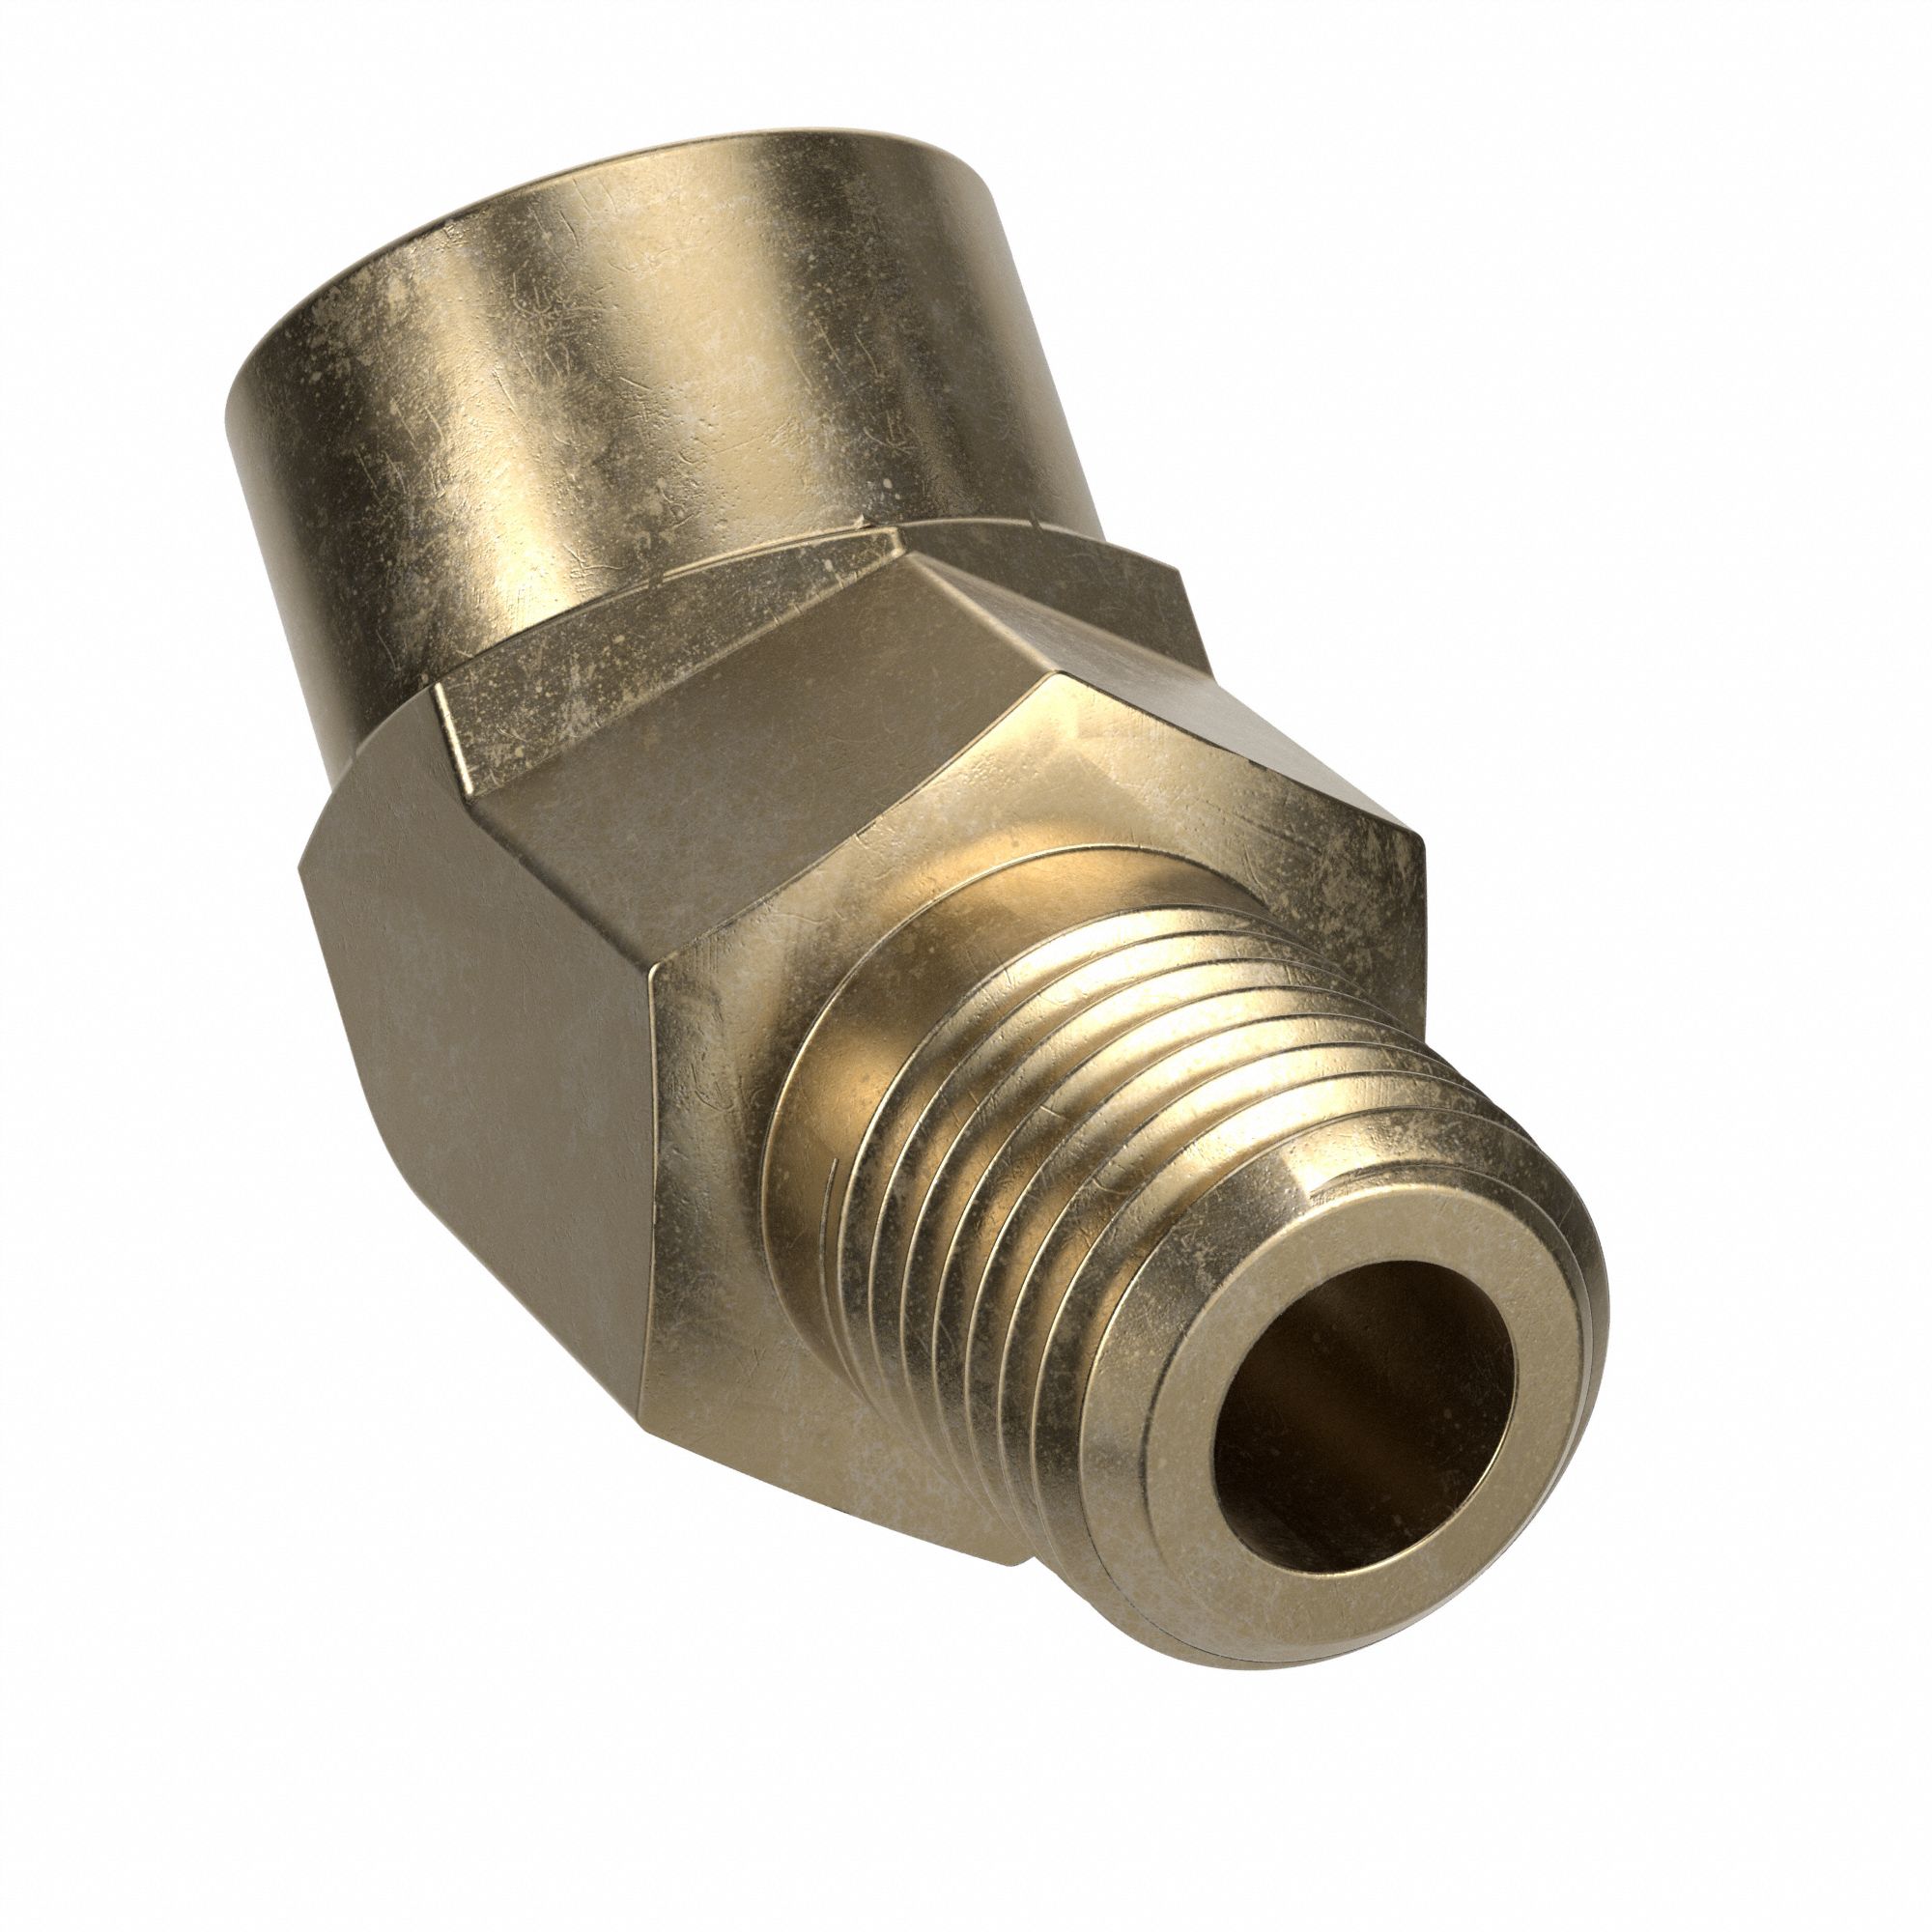 Pump Connection Screw Connection Brass Union Nut Incl. Gasket